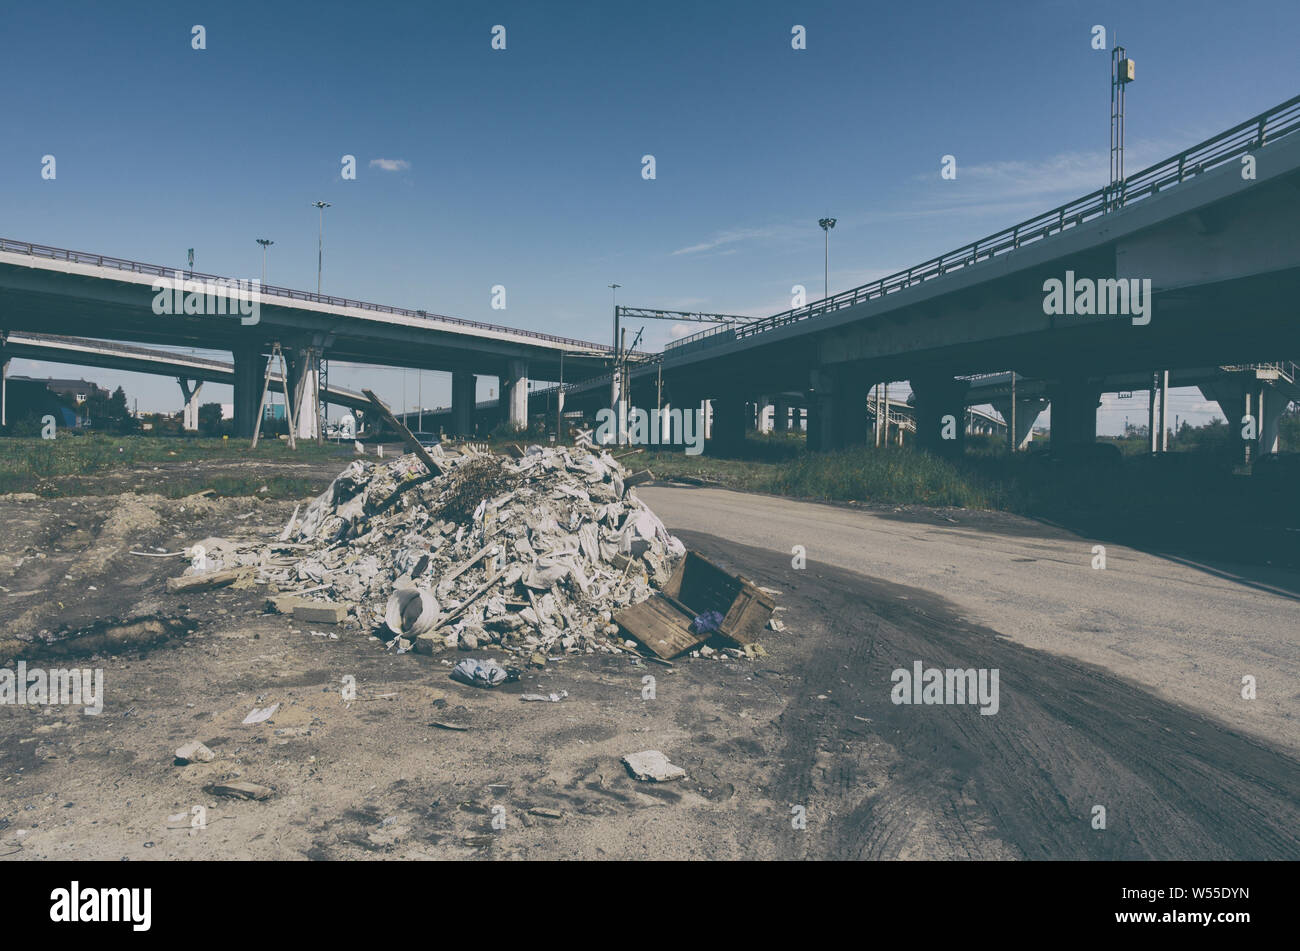 Illegal garbage dump near highways in urban industrial zone Stock Photo